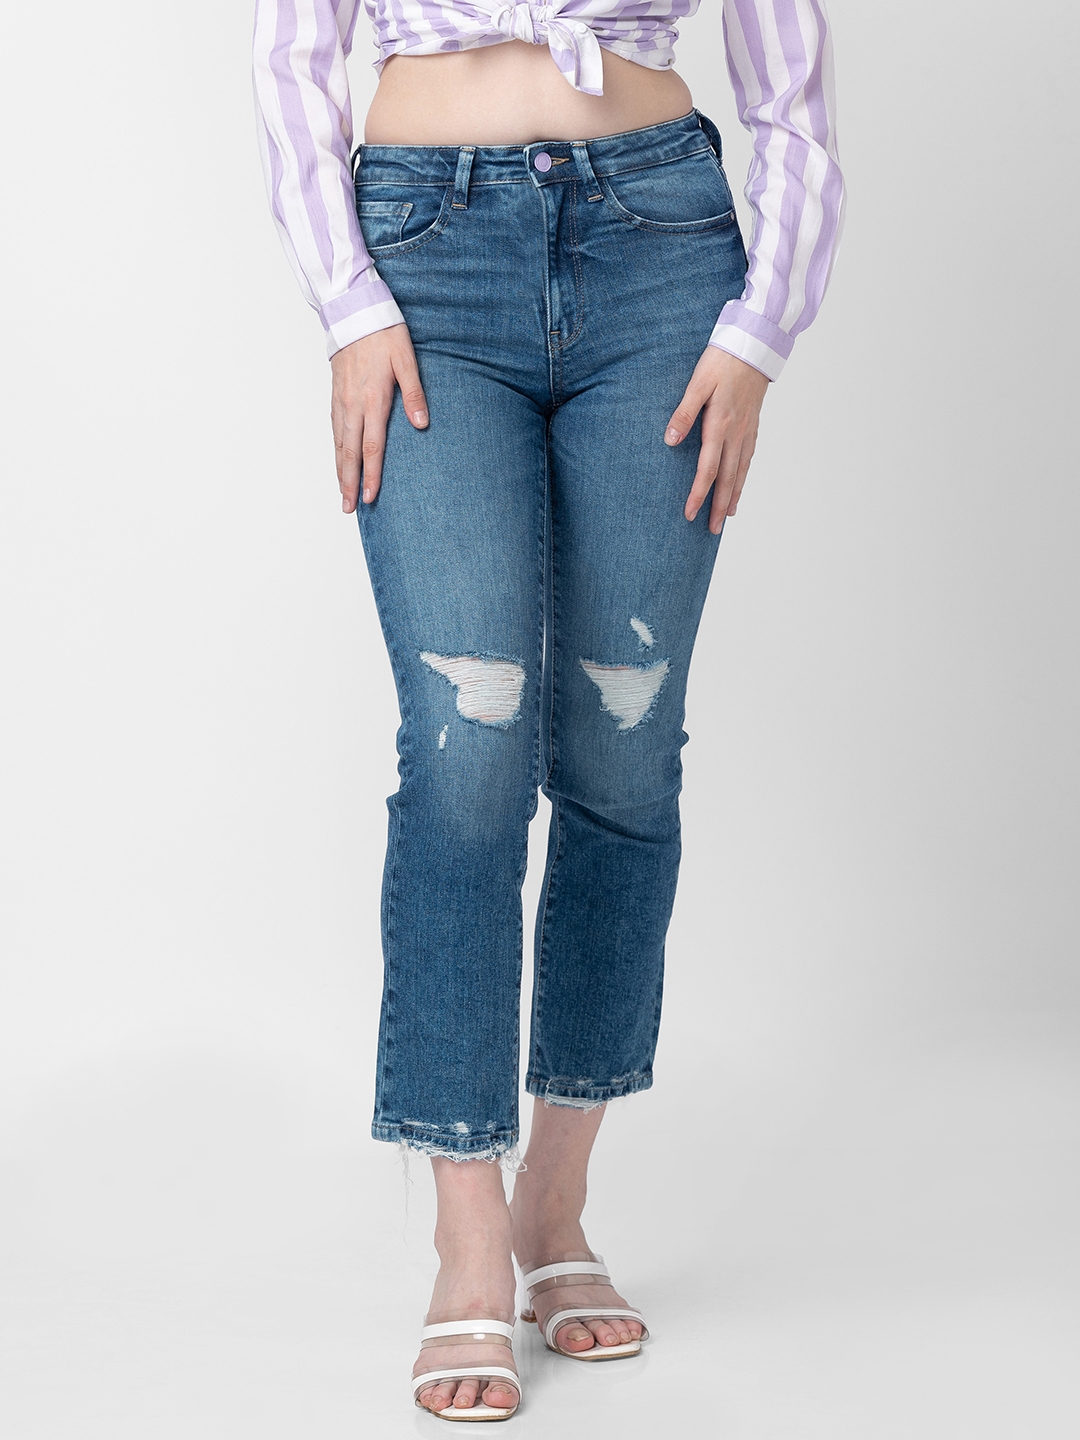 spykar | Women's Blue Cotton Solid Jeans 0